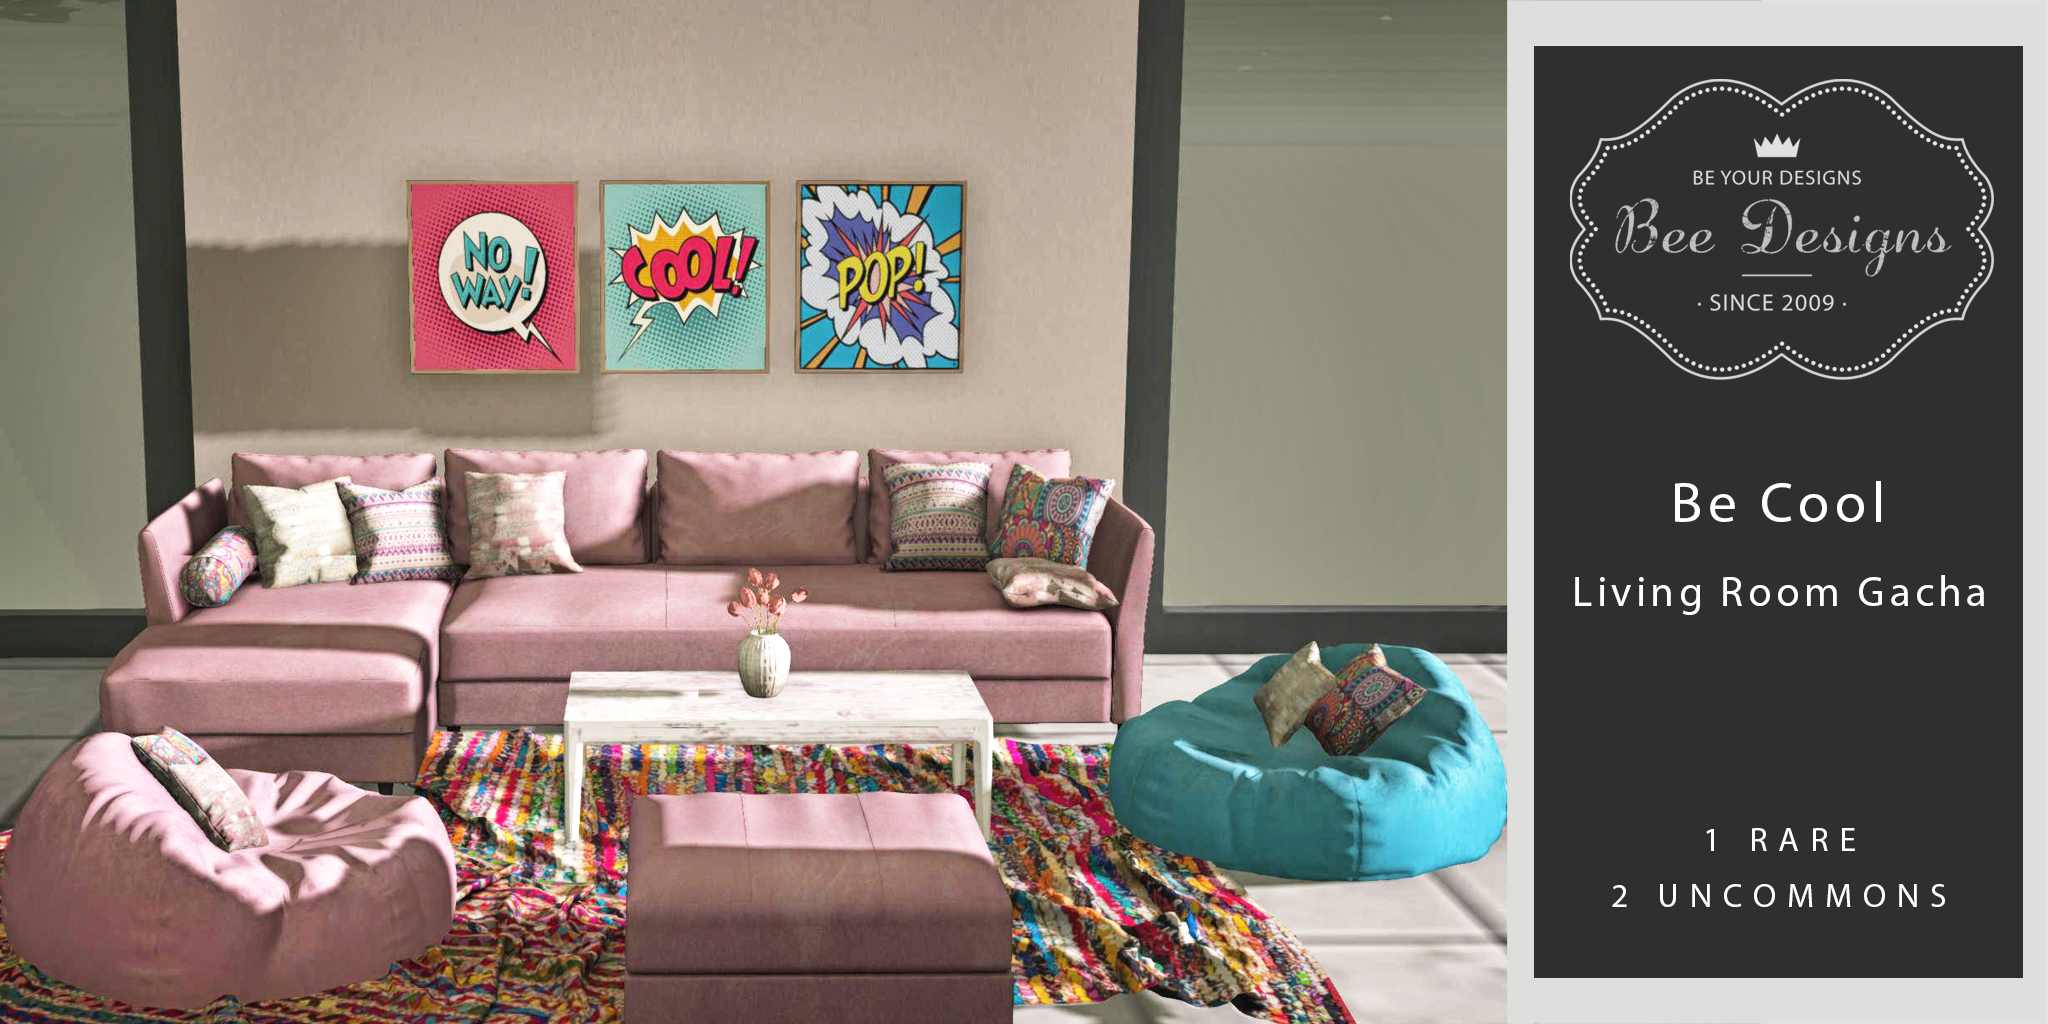 Bee Designs – Be Cool Living Room Gacha